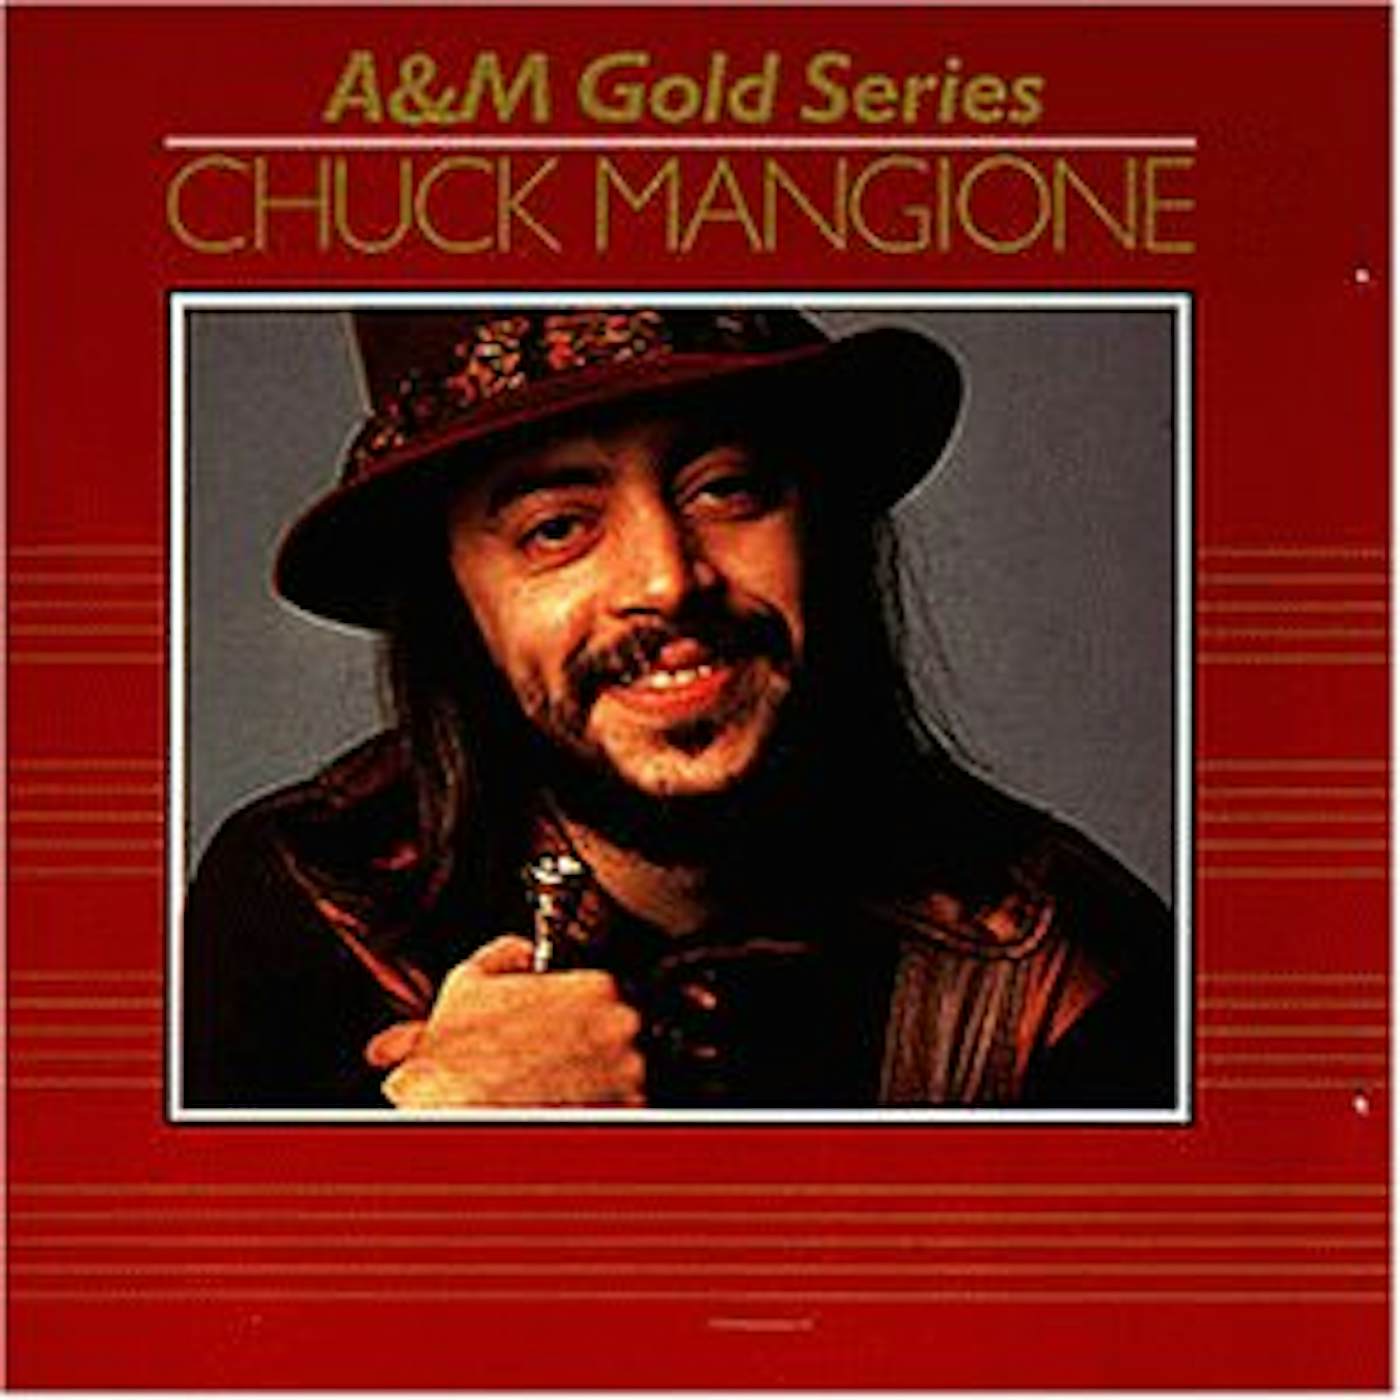 Chuck Mangione A&M GOLD SERIES CD